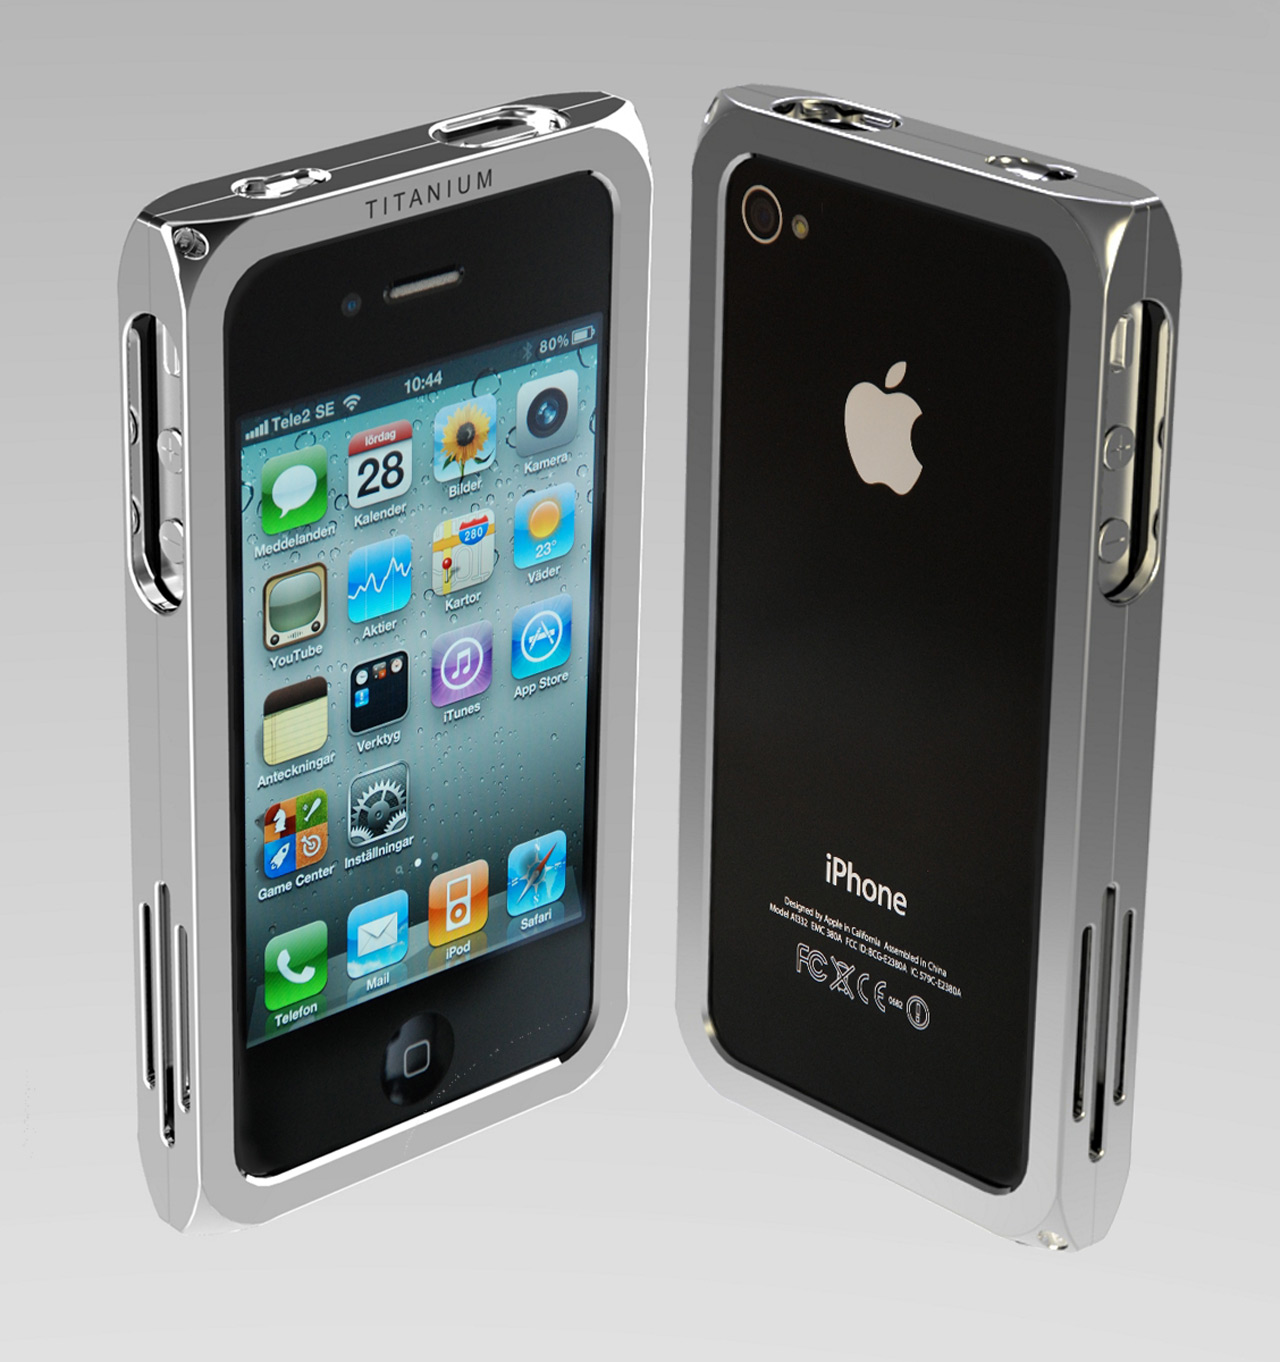 Hagardzon Titanium iPhone Case - As High-tech as the iPhone Inside